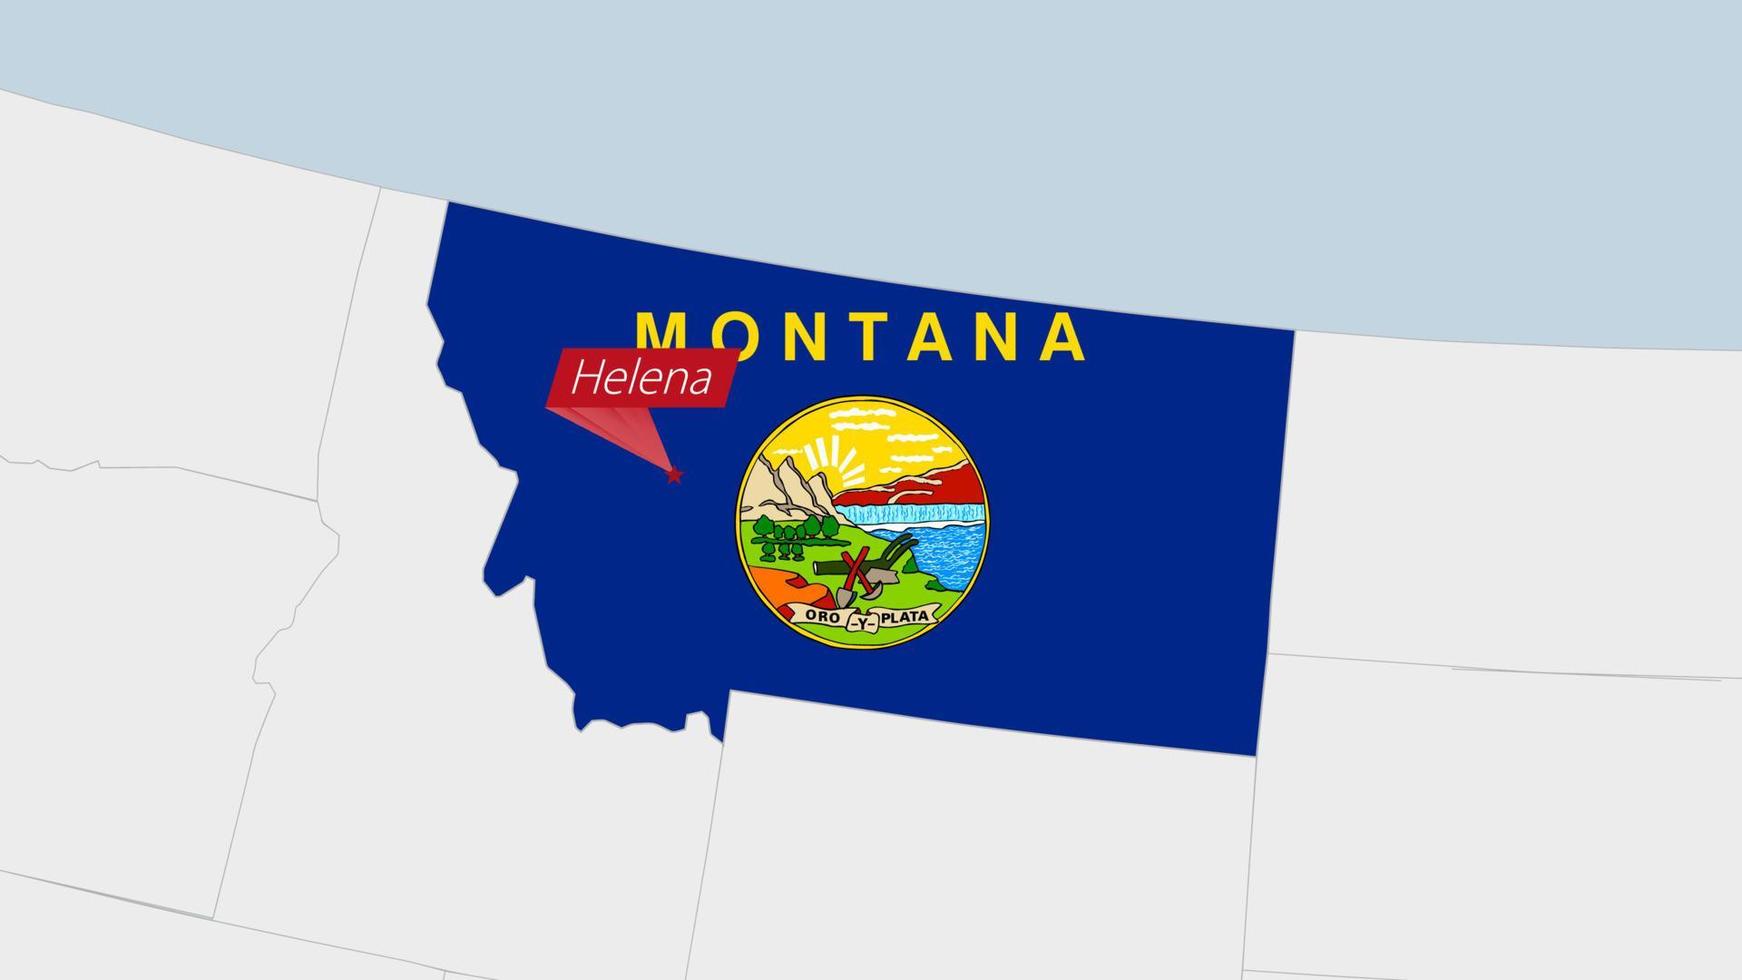 nos Estado montana mapa em destaque dentro montana bandeira cores e PIN do país capital helena. vetor